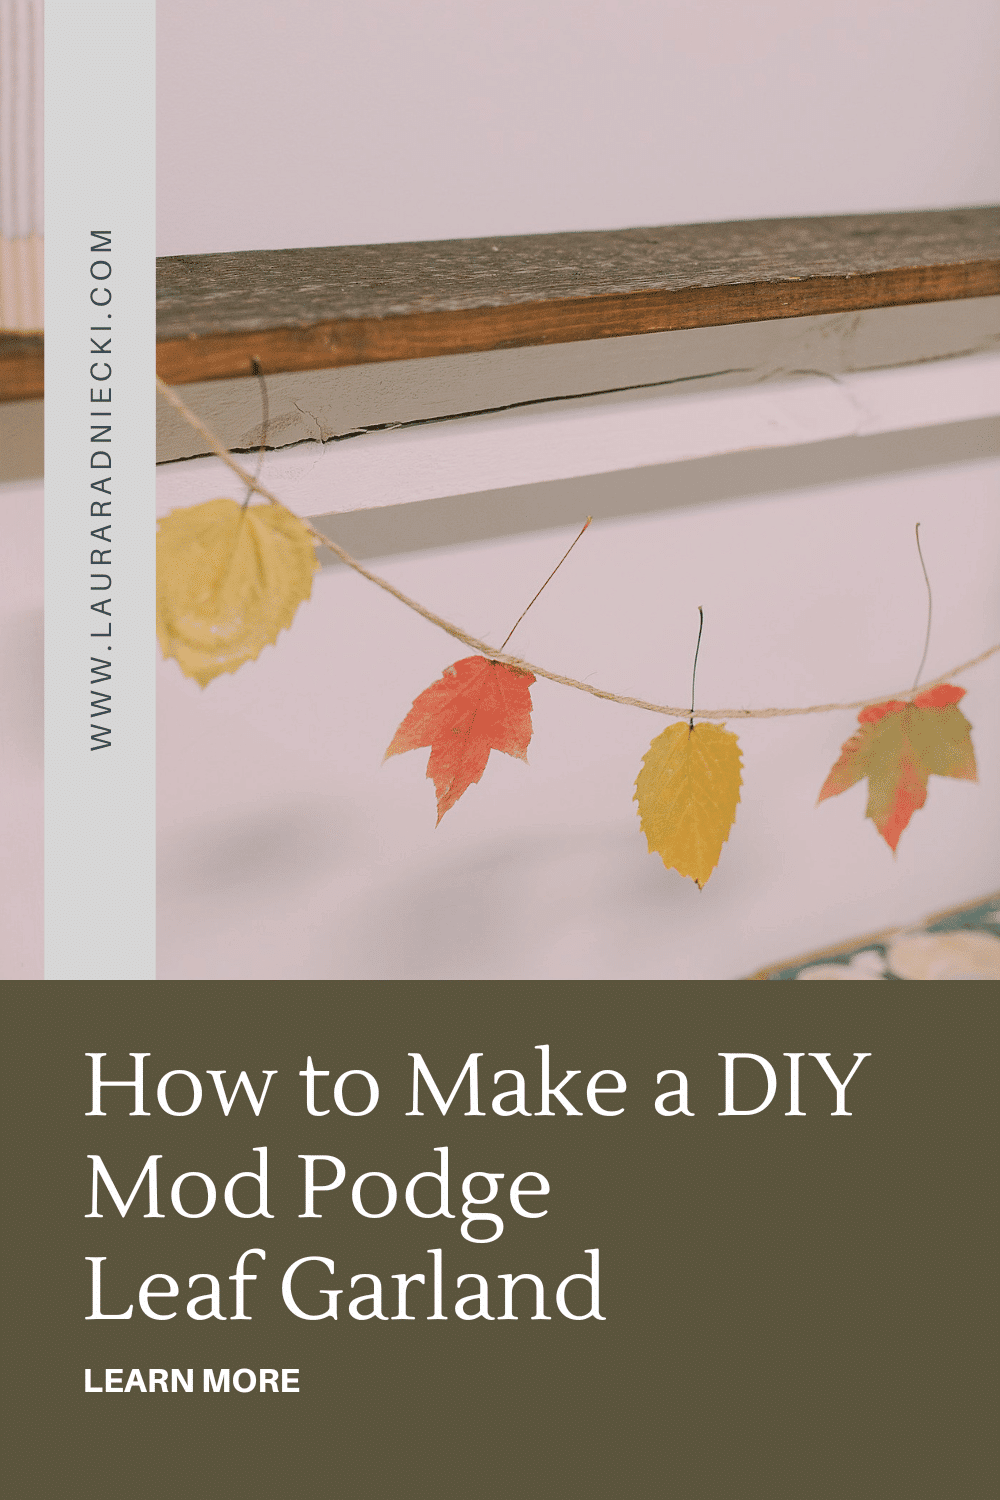 How to Make a Mod Podge Leaf Garland